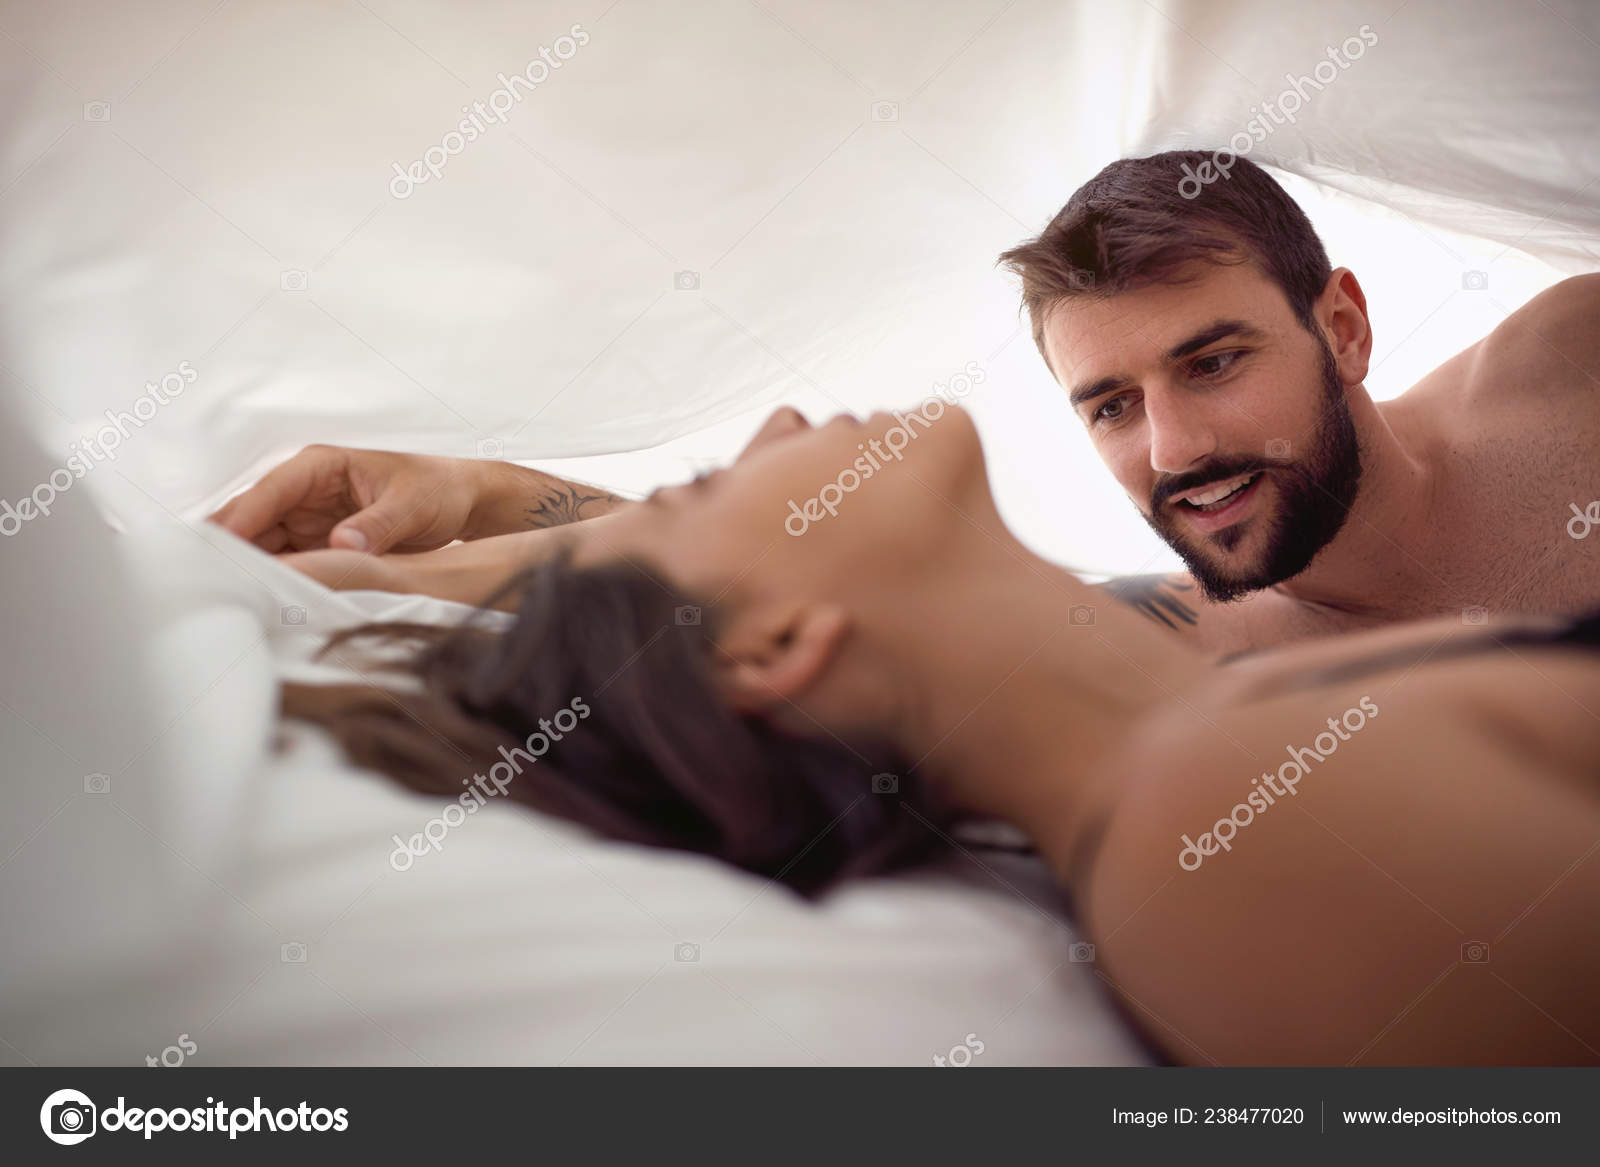 Bed love sex